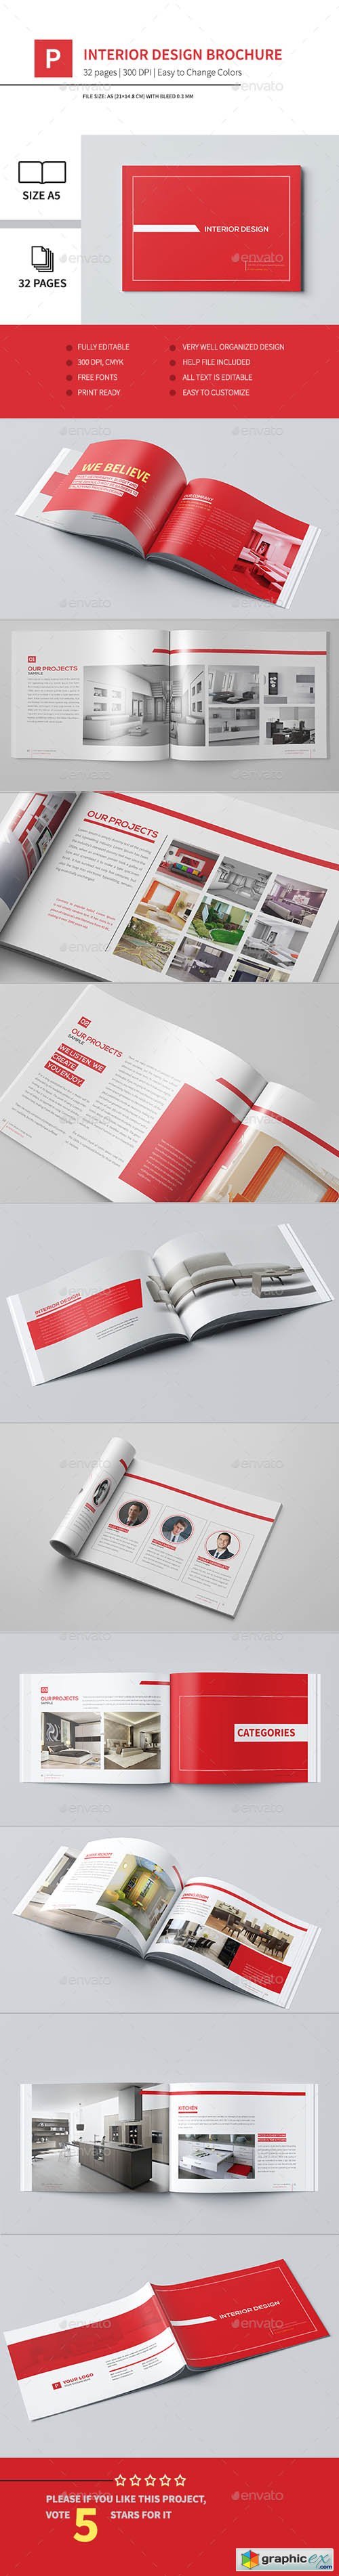 Interior Design Brochure 2015